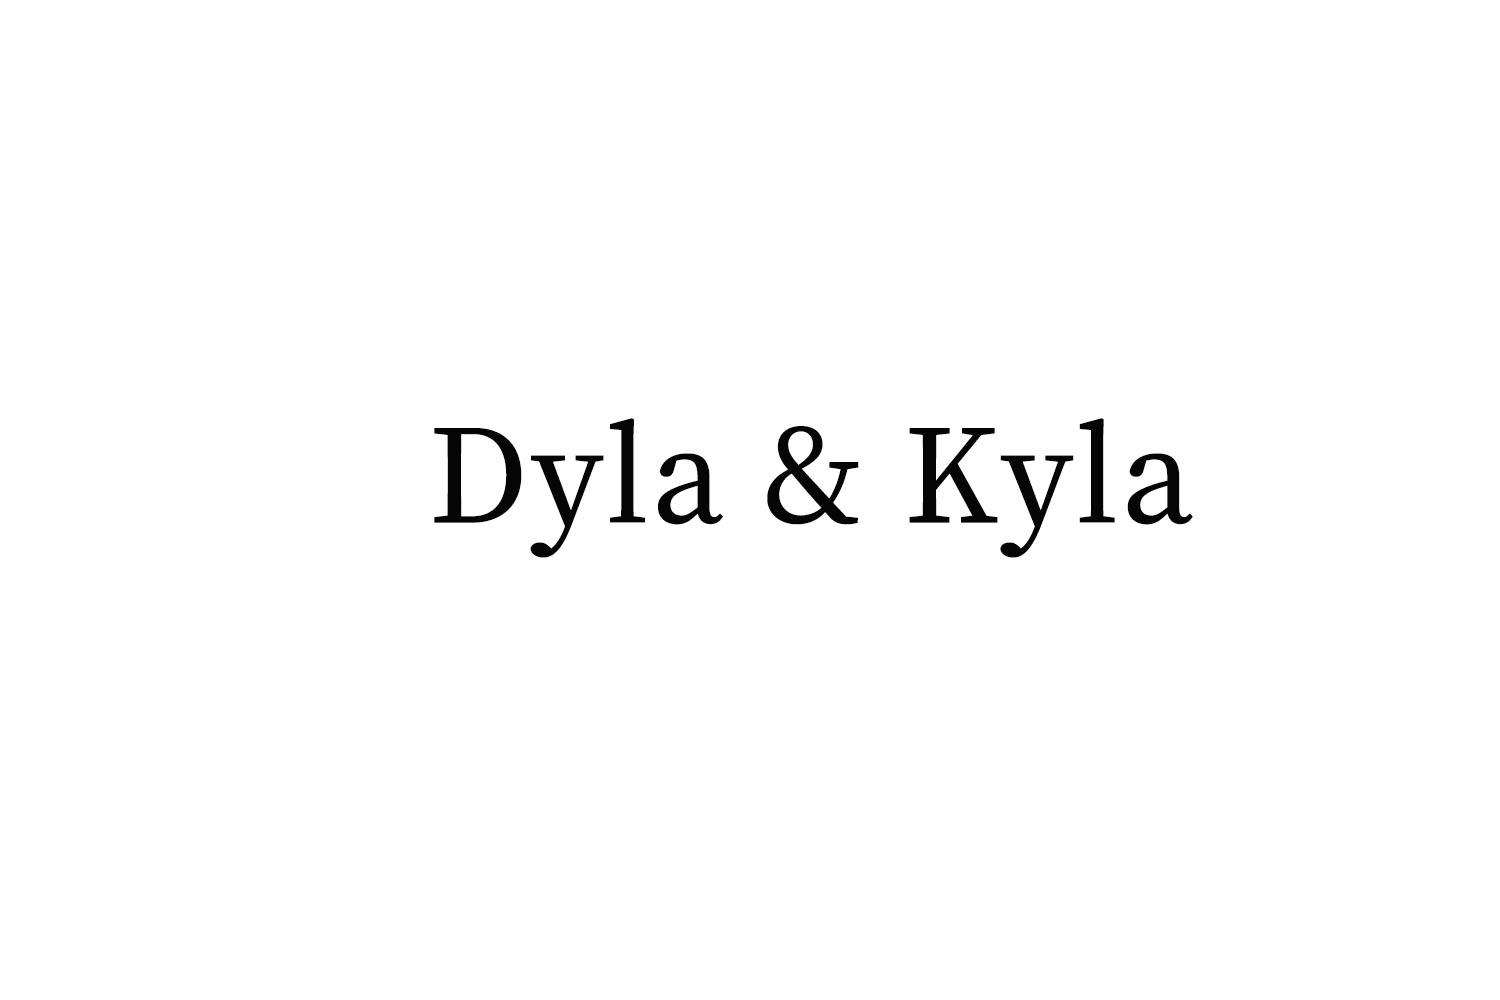 35类-广告销售DYLA & KYLA商标转让